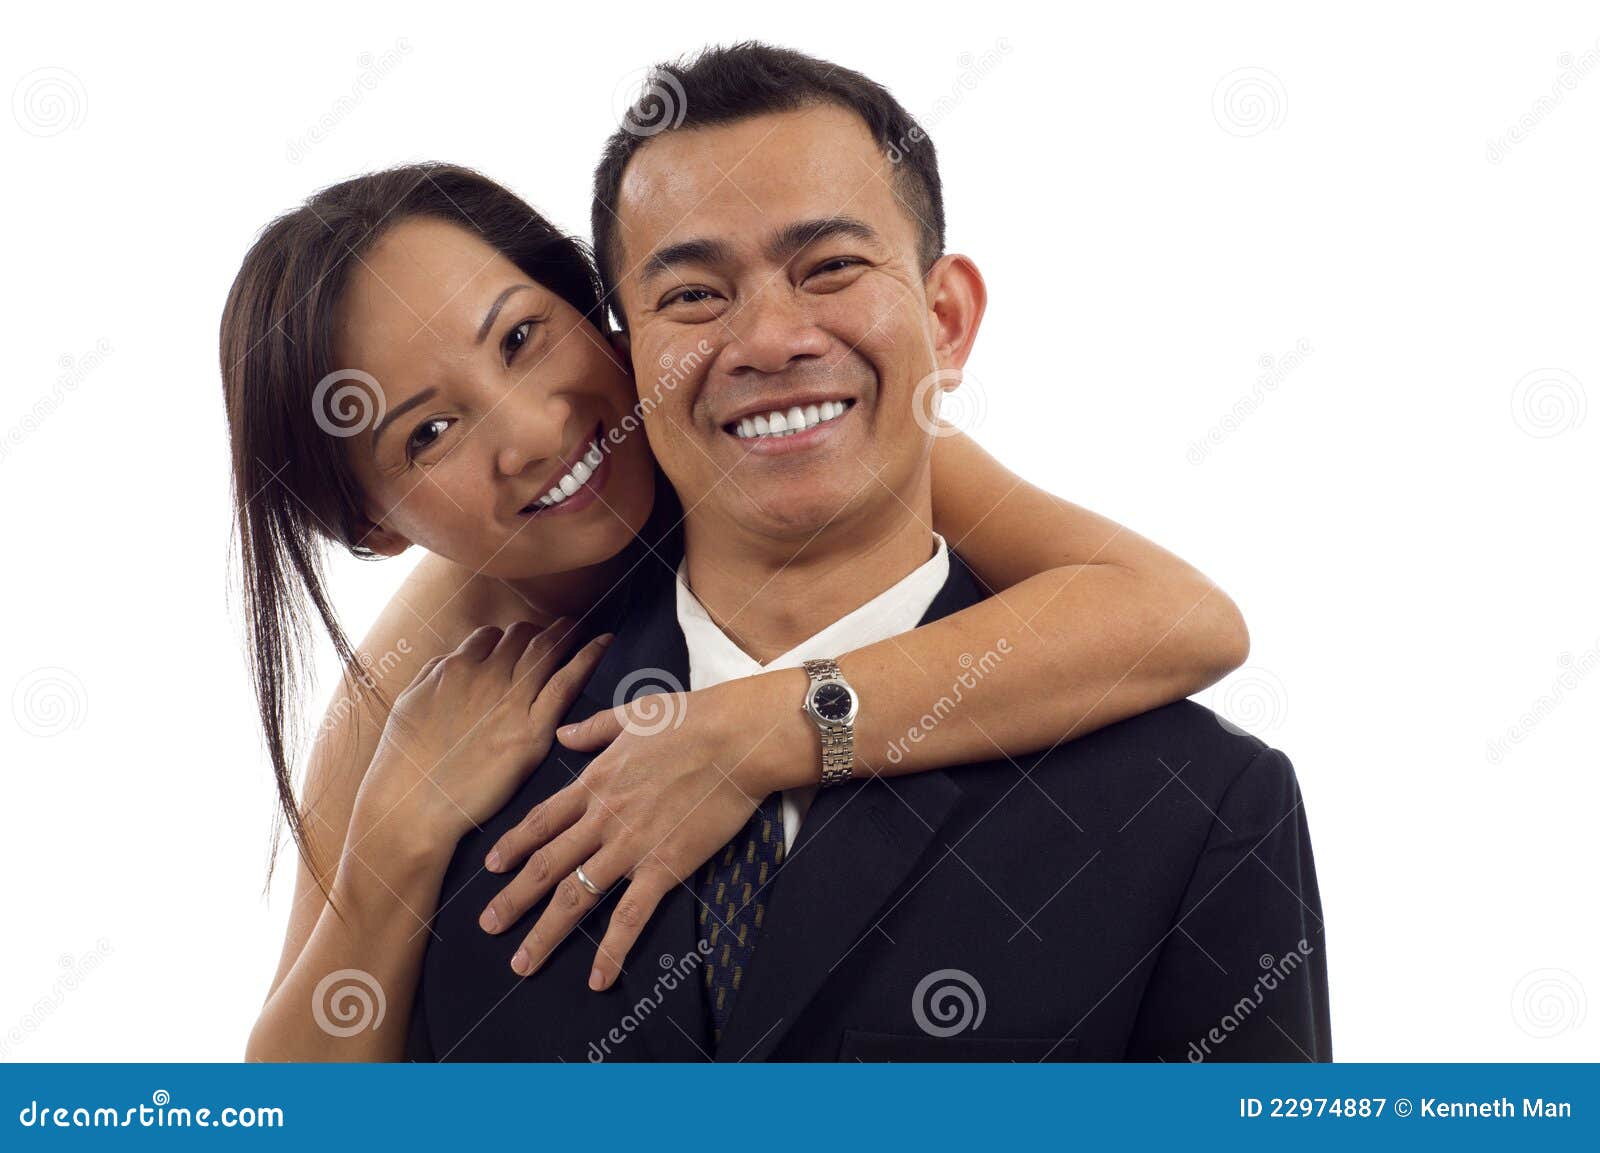 https://thumbs.dreamstime.com/z/asian-couple-22974887.jpg